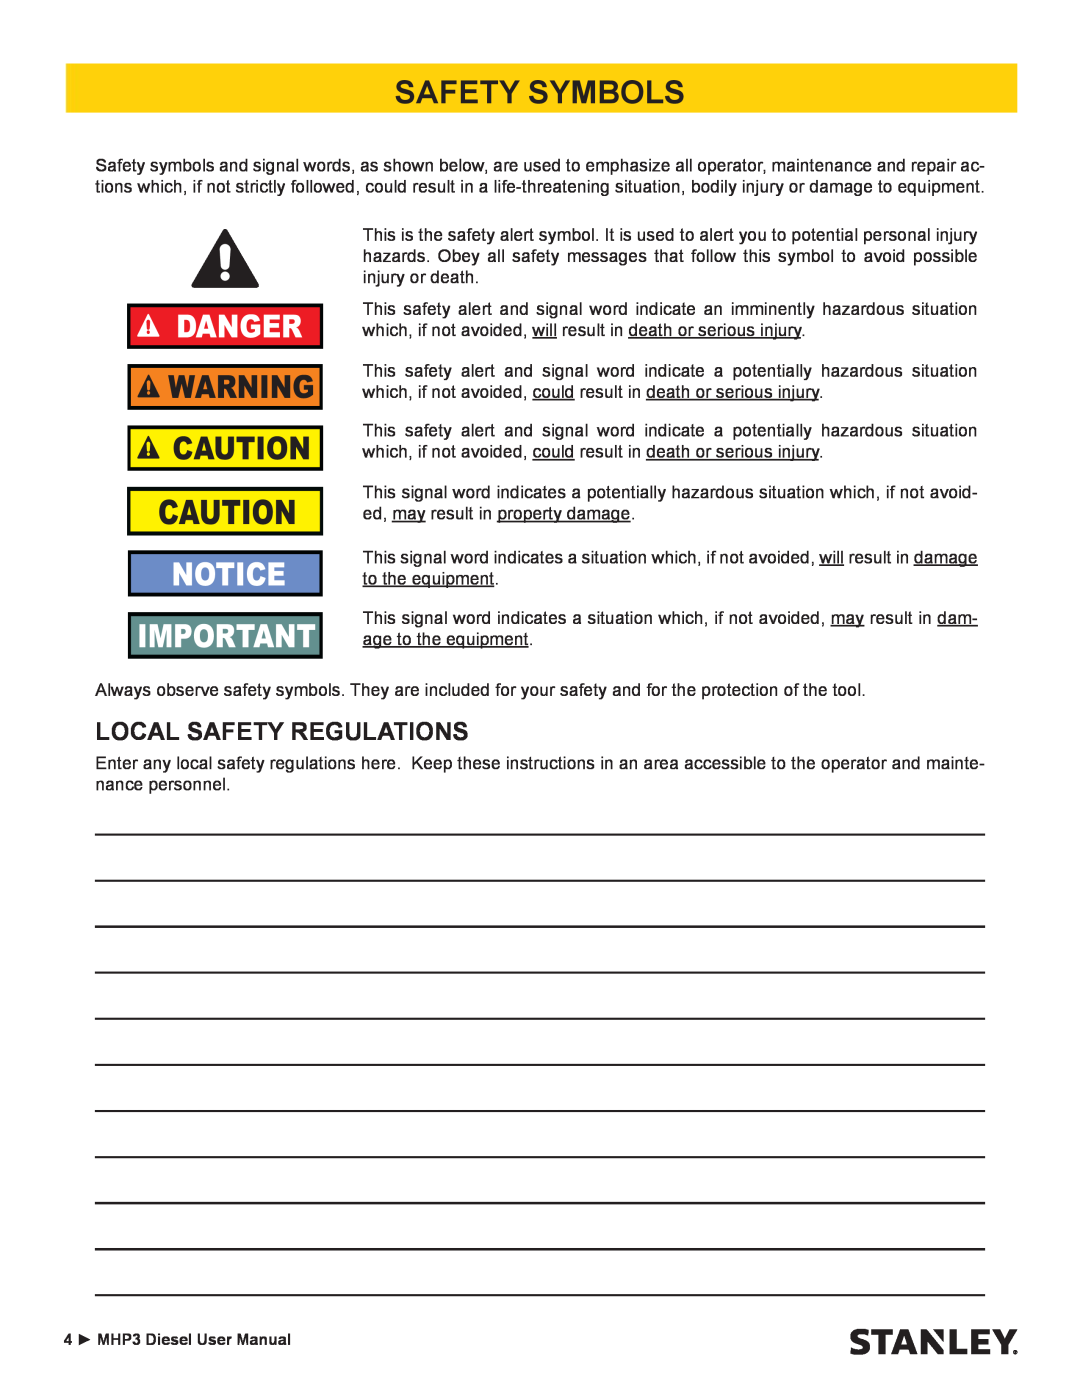 Stanley Black & Decker MHP3 manual Safety Symbols, Local Safety Regulations, Danger 